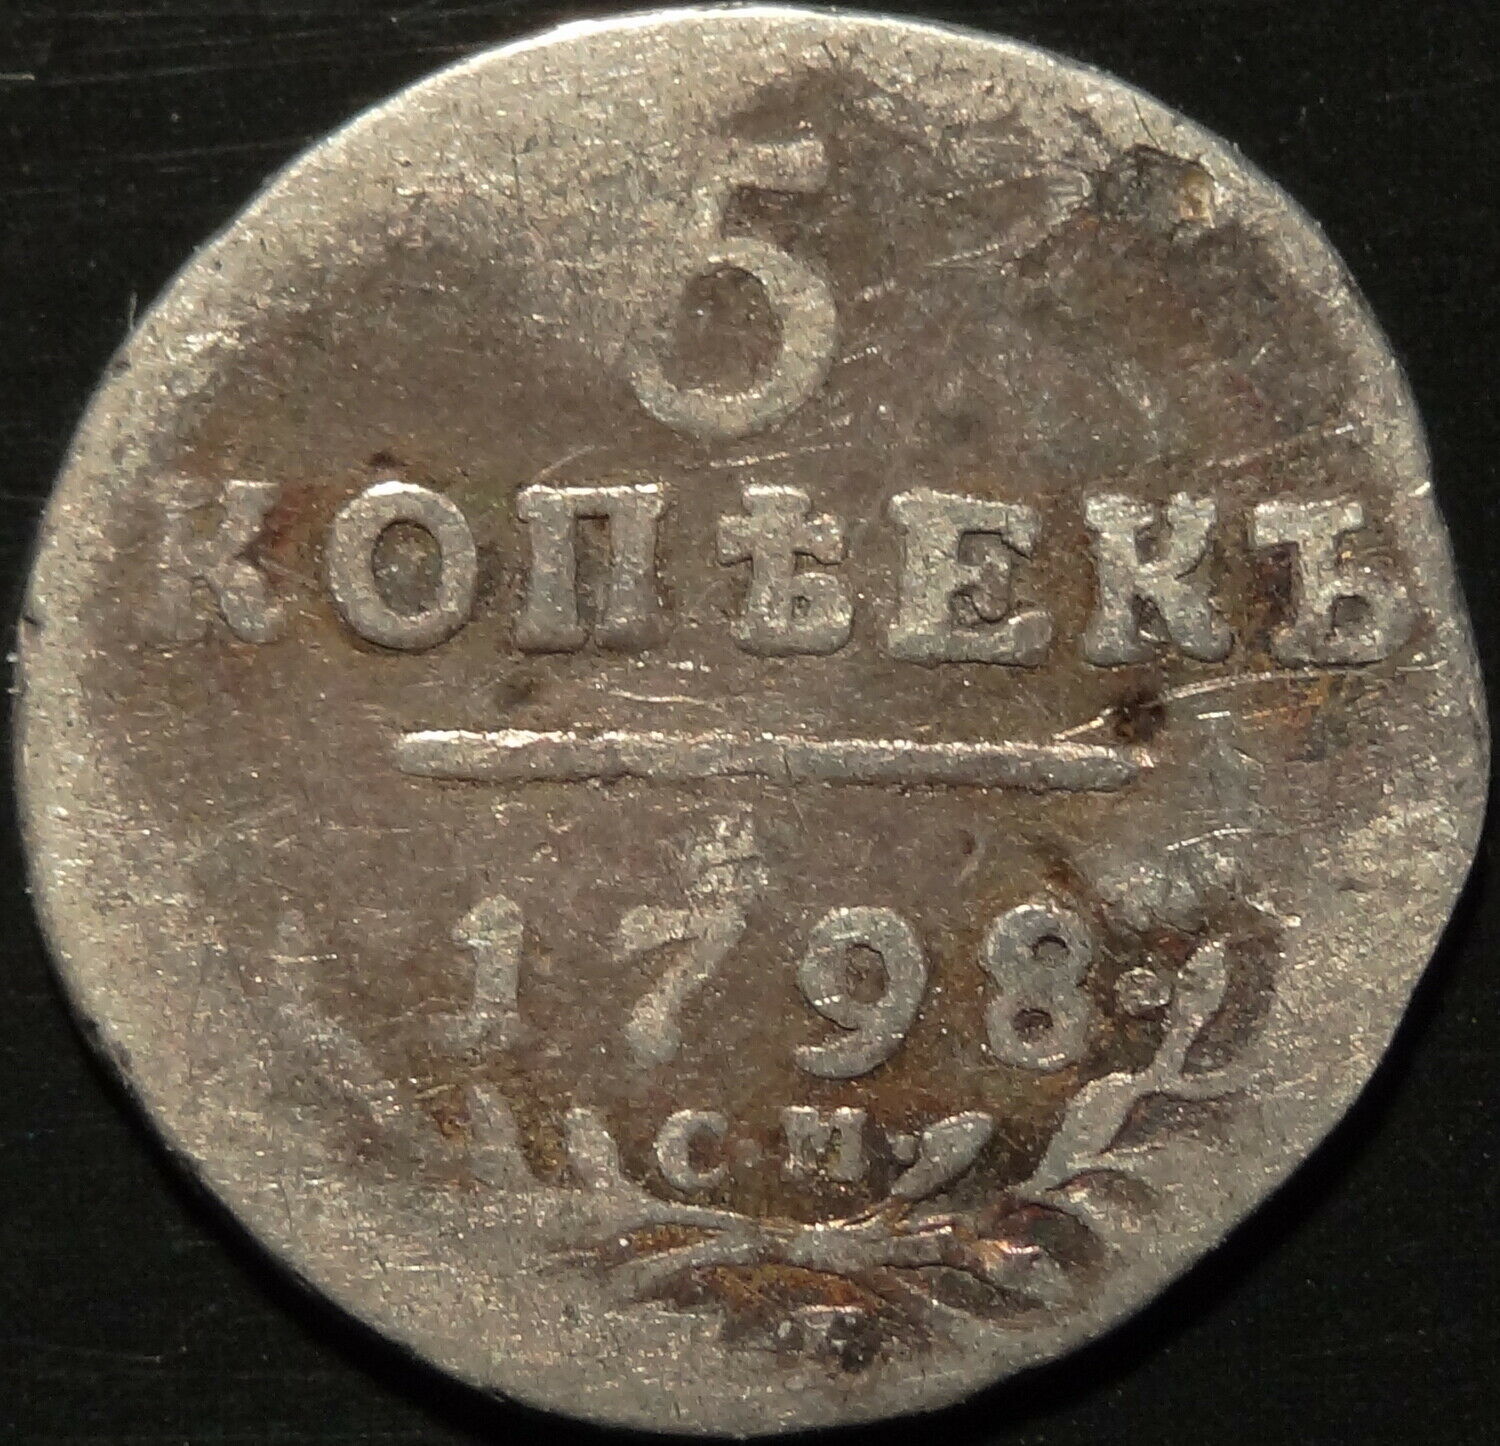 Bitkin 88 (r) - Russia 5 Kopeks 1798 Cm-mb, A Very Nice 5 Kopeck Coin!